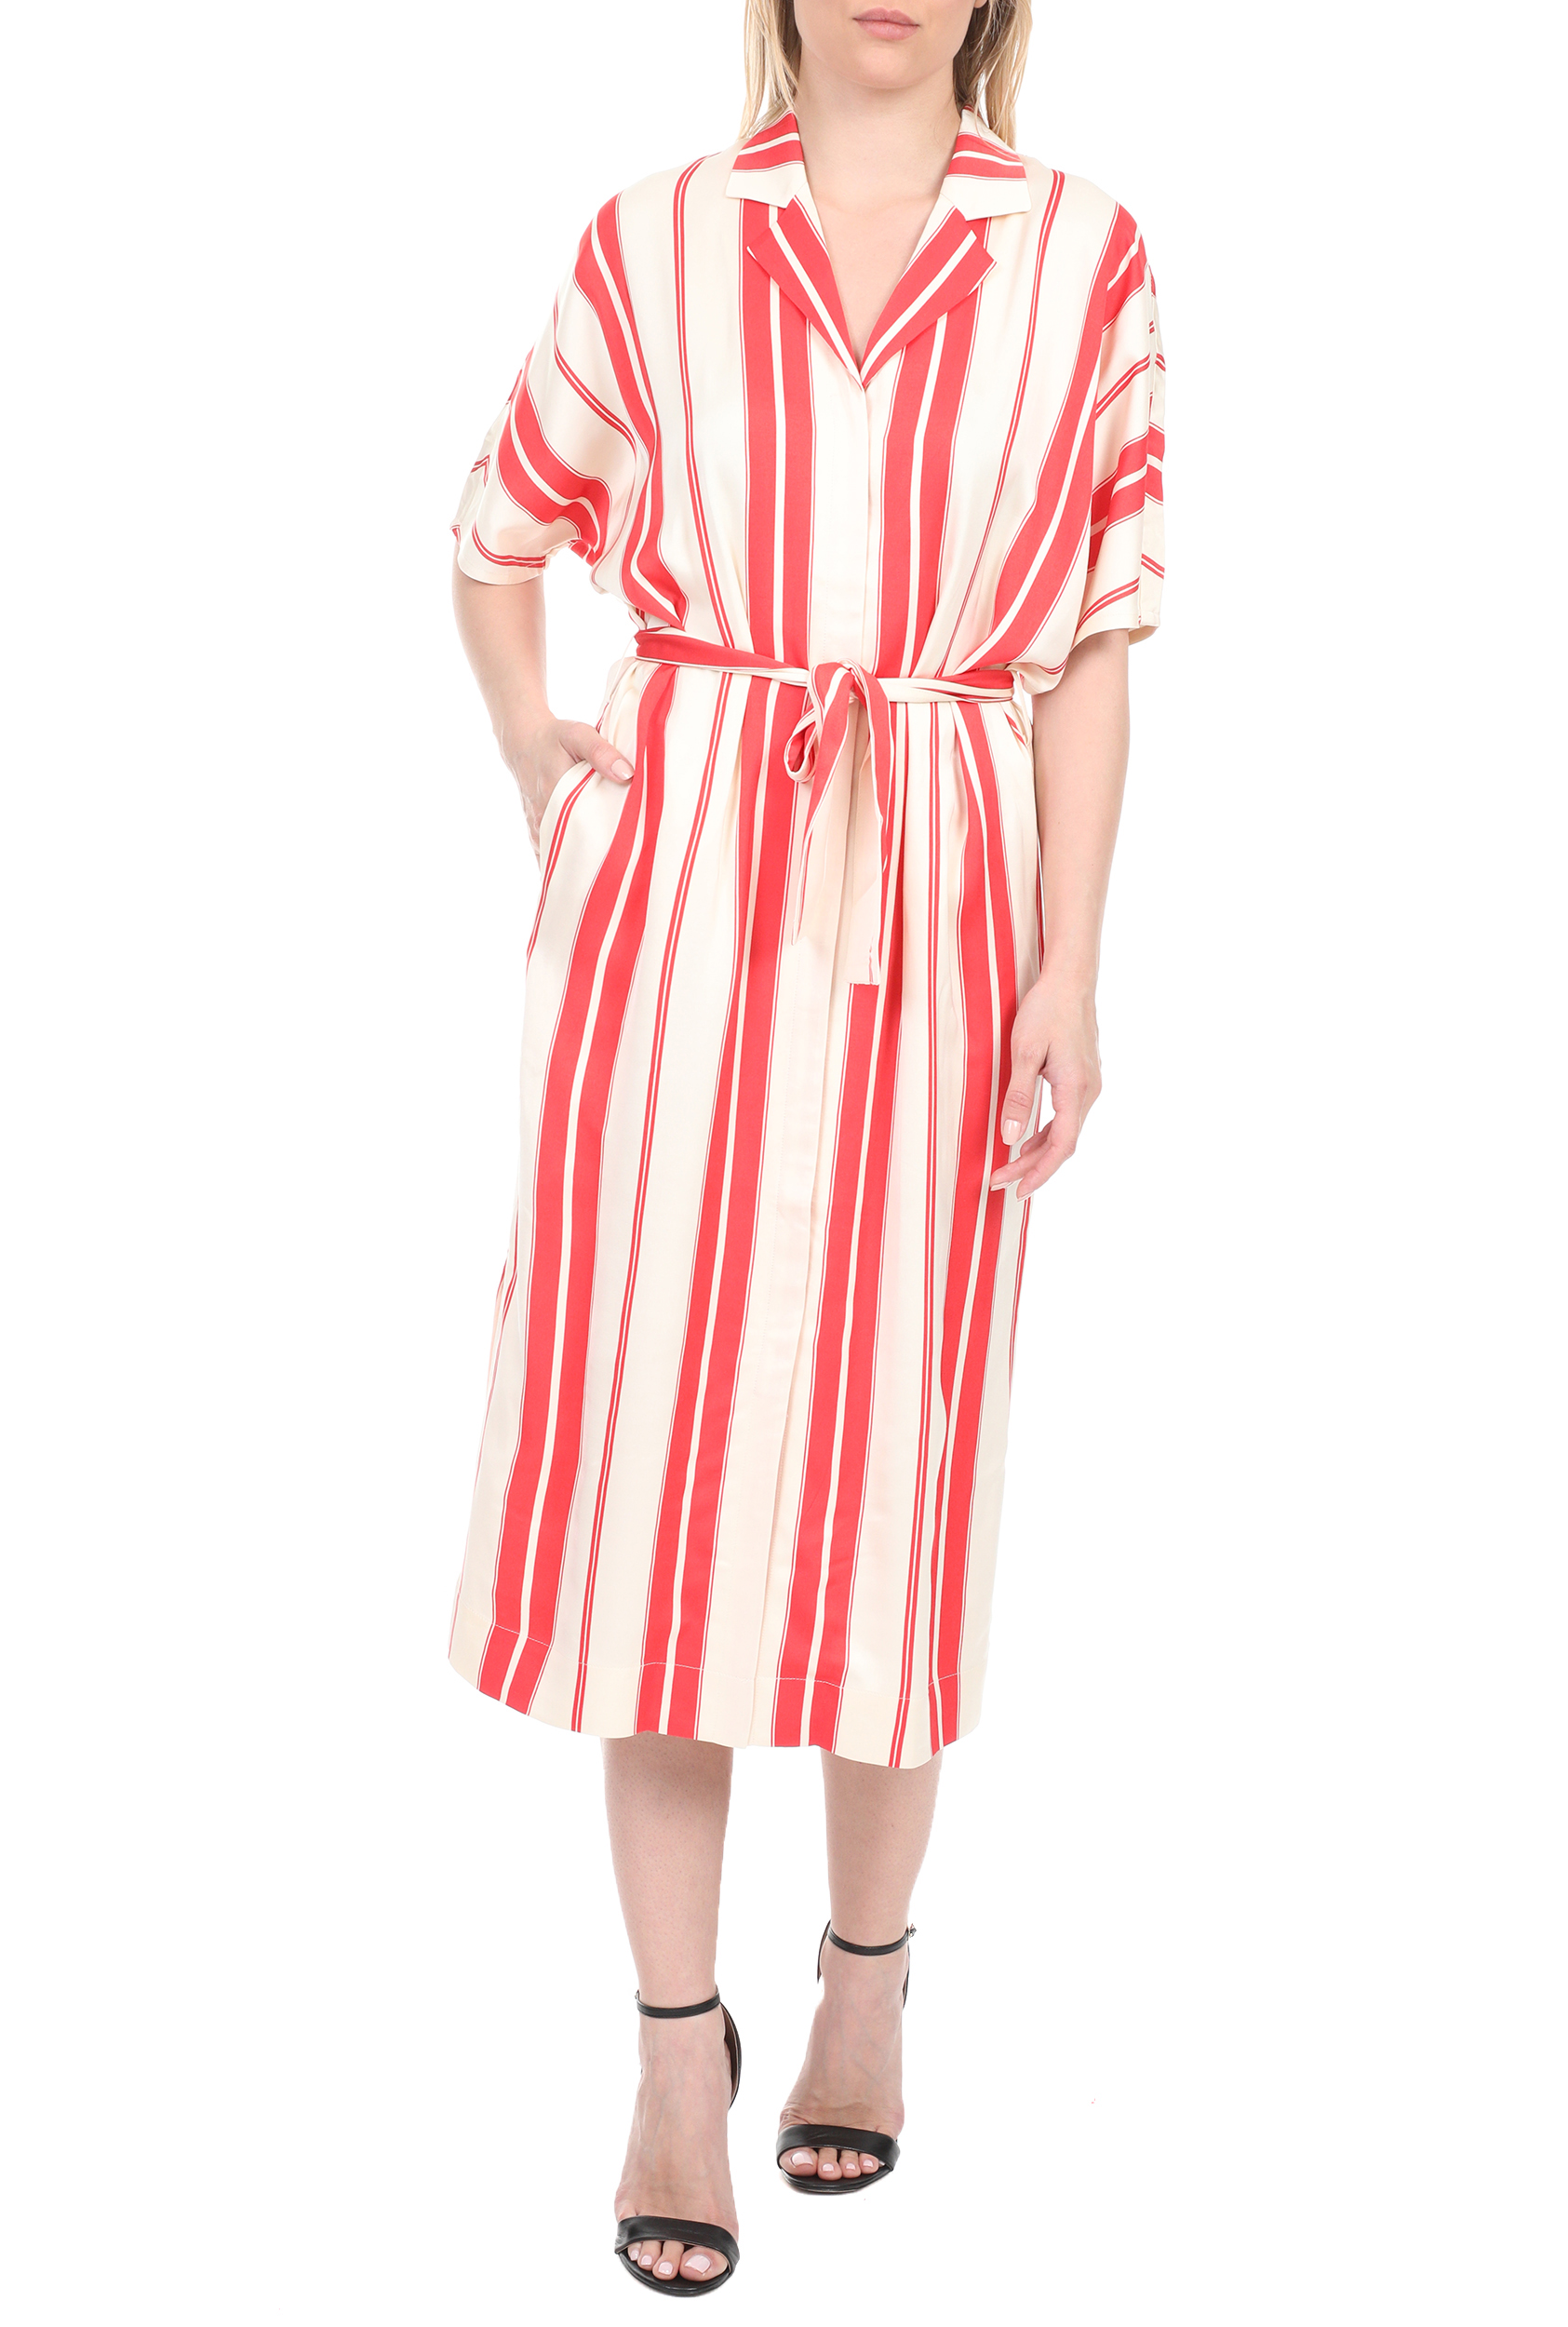 SCOTCH & SODA SCOTCH & SODA - Γυναικείο μακρύ φόρεμα SCOTCH & SODA λευκό κόκκινο